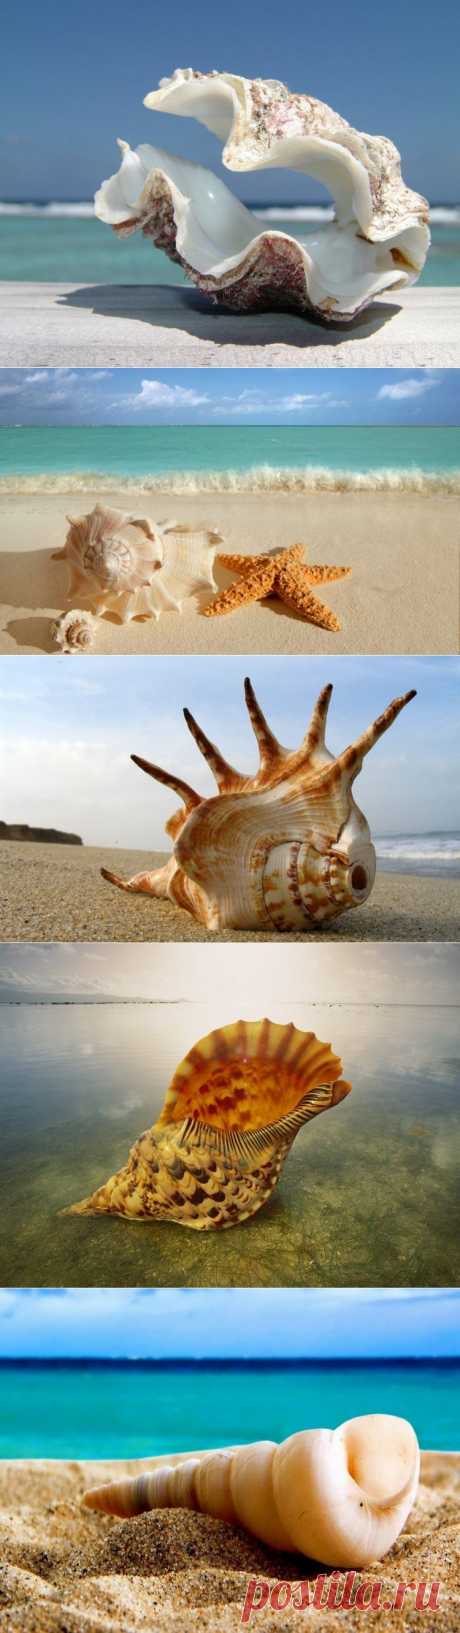 Воспоминание о море... Красивые морские ракушки - Фотопанорама